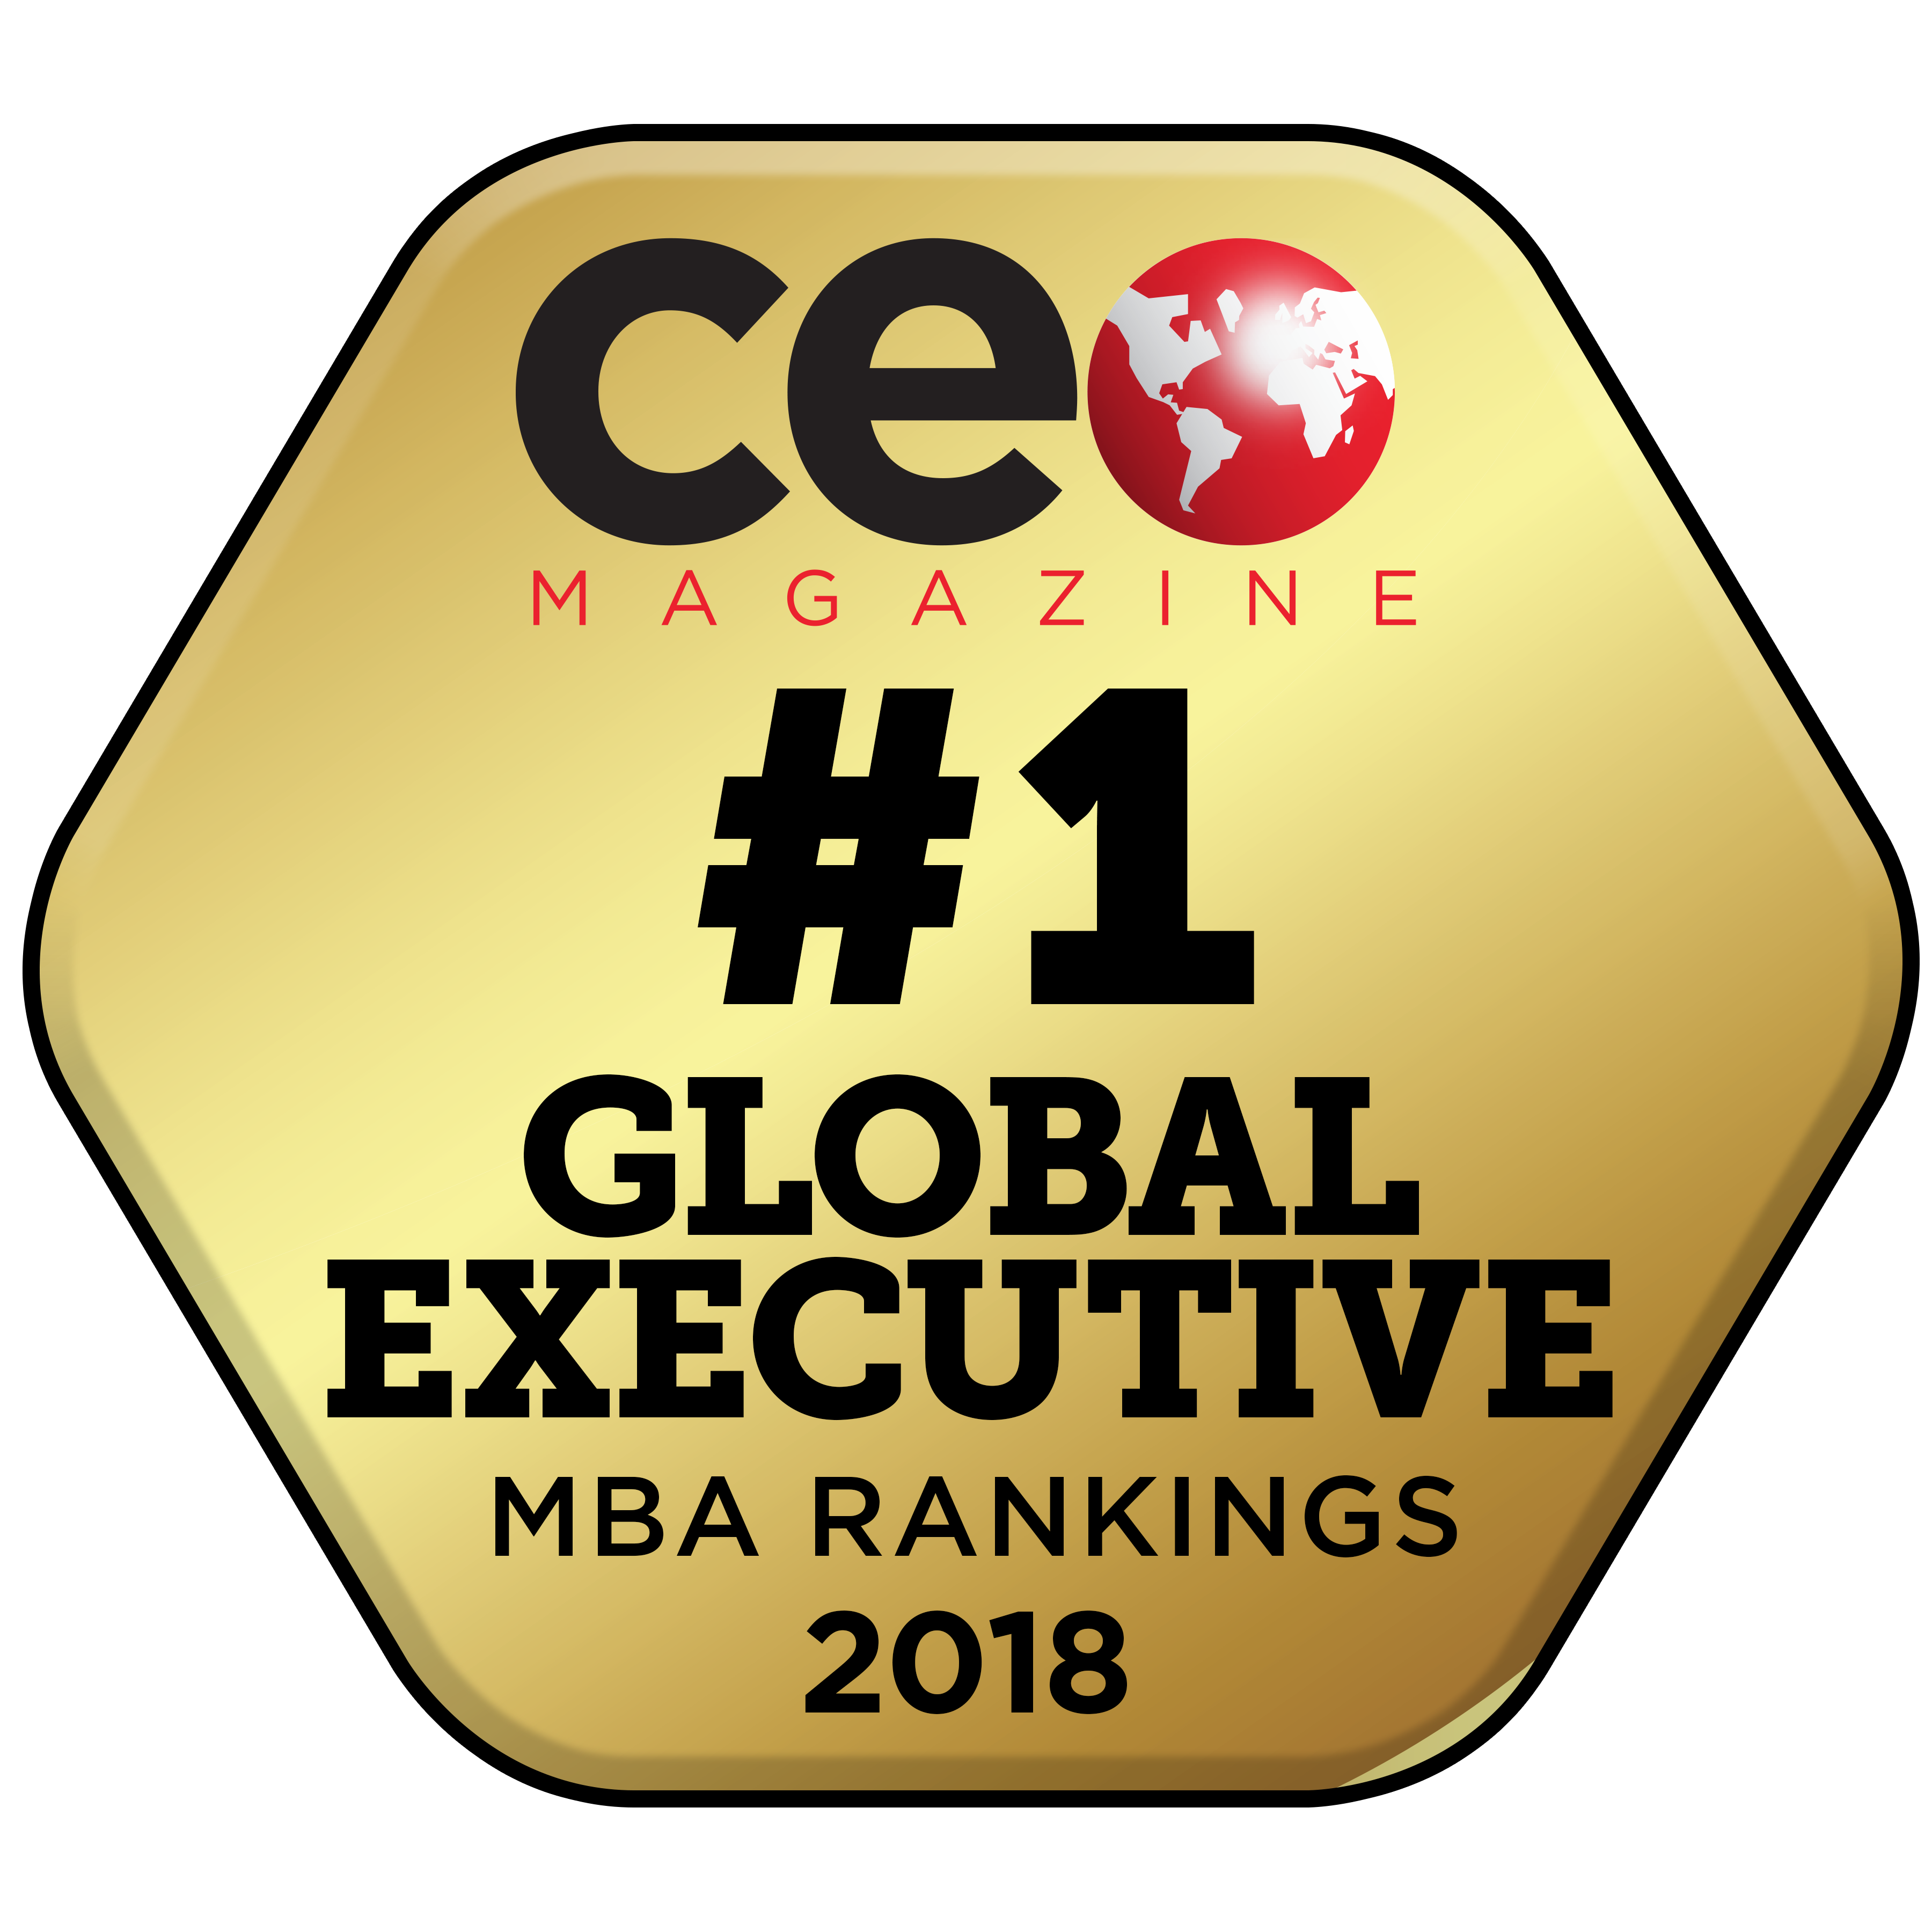 CEO Magazine #1 Global Executive MBA Ranking Badge